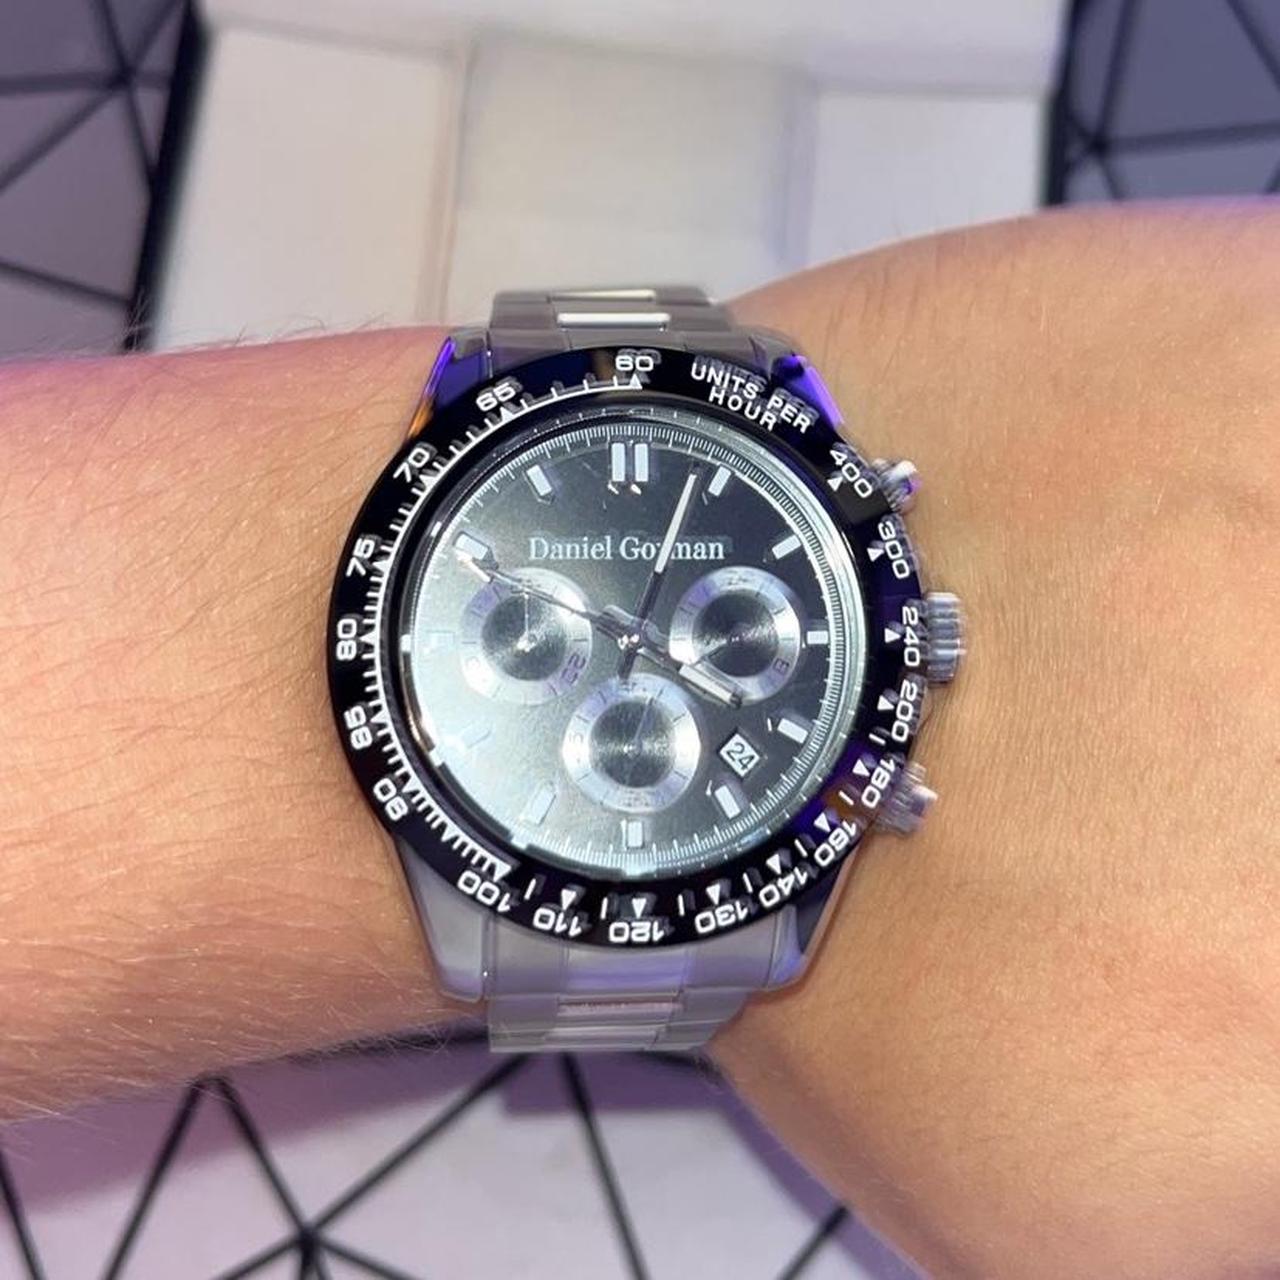 Daniel Gorman Top Brand Men Watch Sports Quartz Watches Full Steel  Waterproof Chronograph Wristwatch From Fashion_8888, $82.24 | DHgate.Com